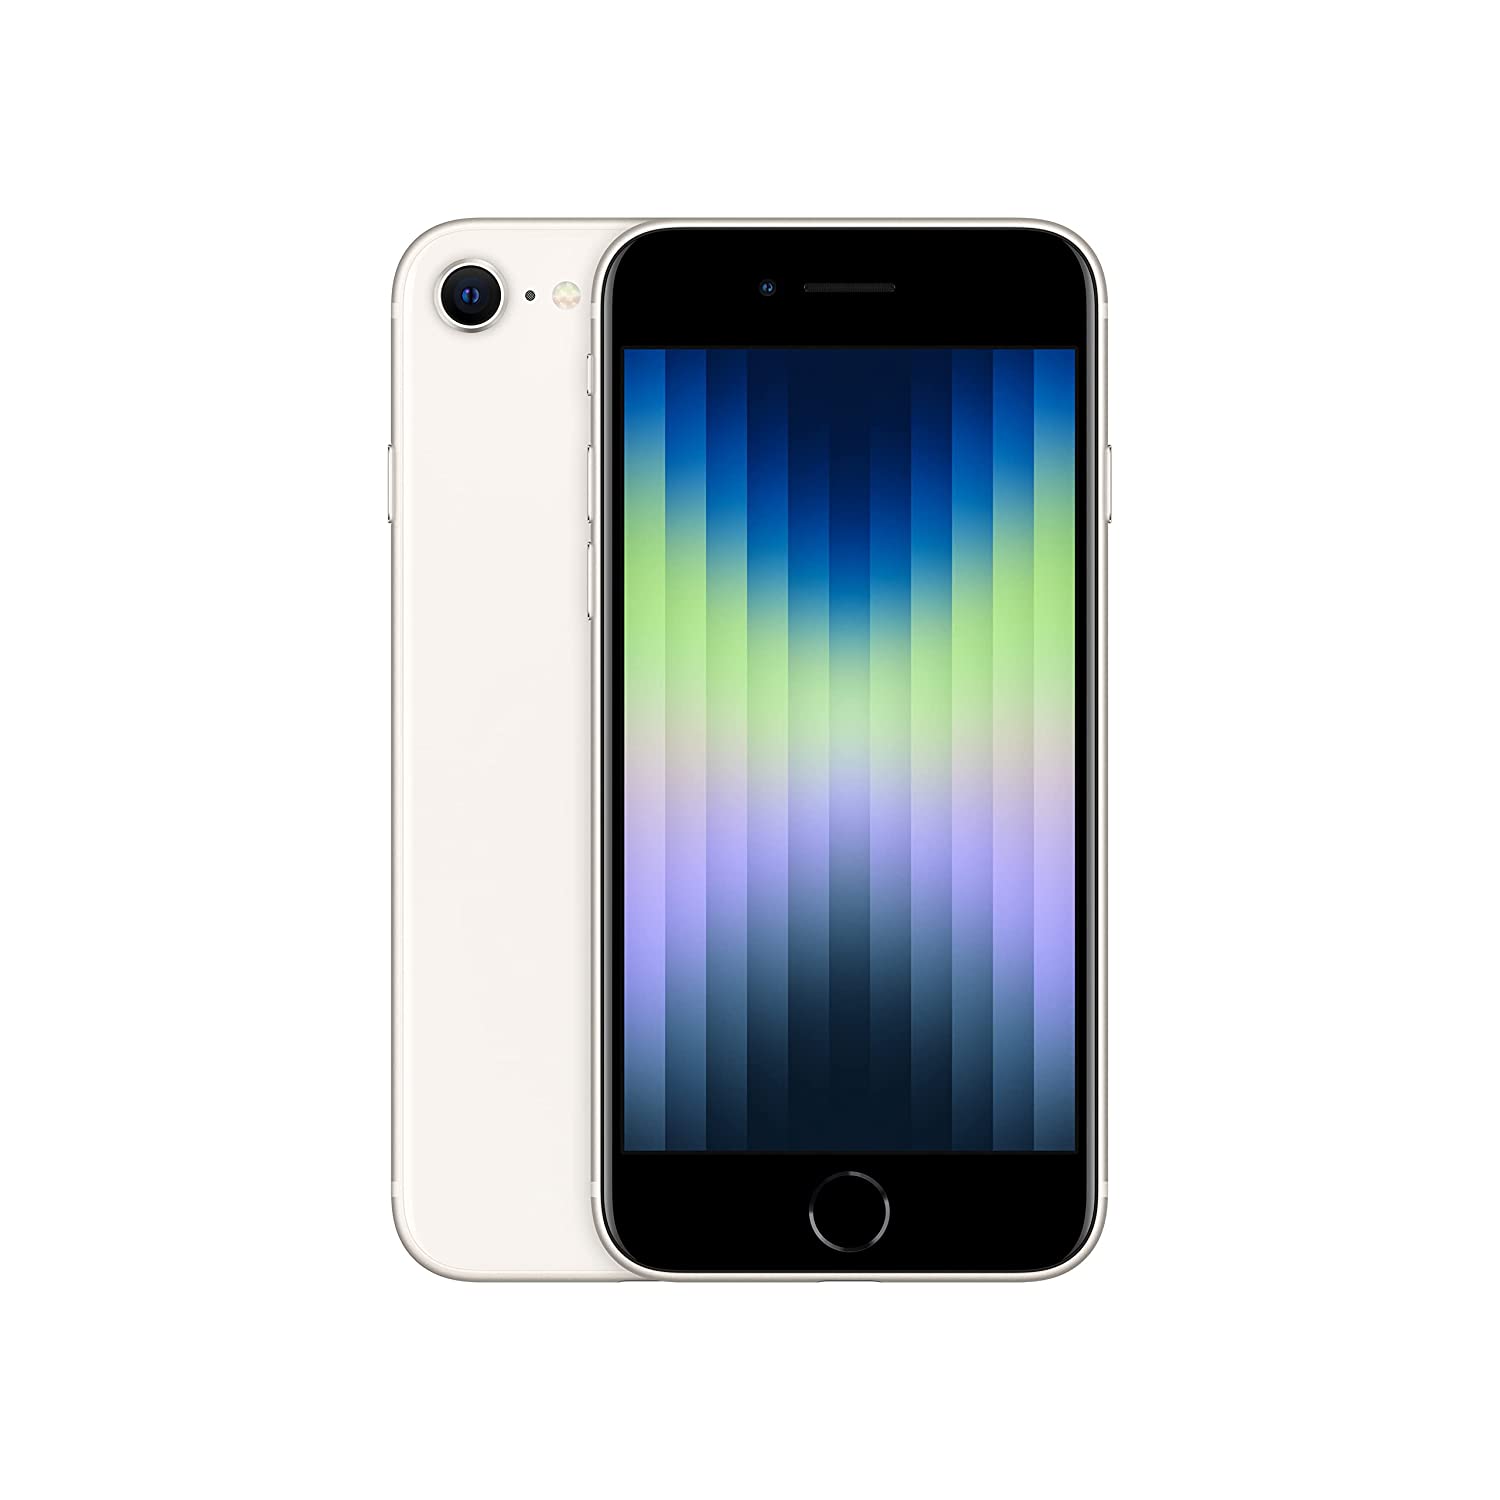 Apple iPhone SE (256 GB) – Starlight (3rd Generation)